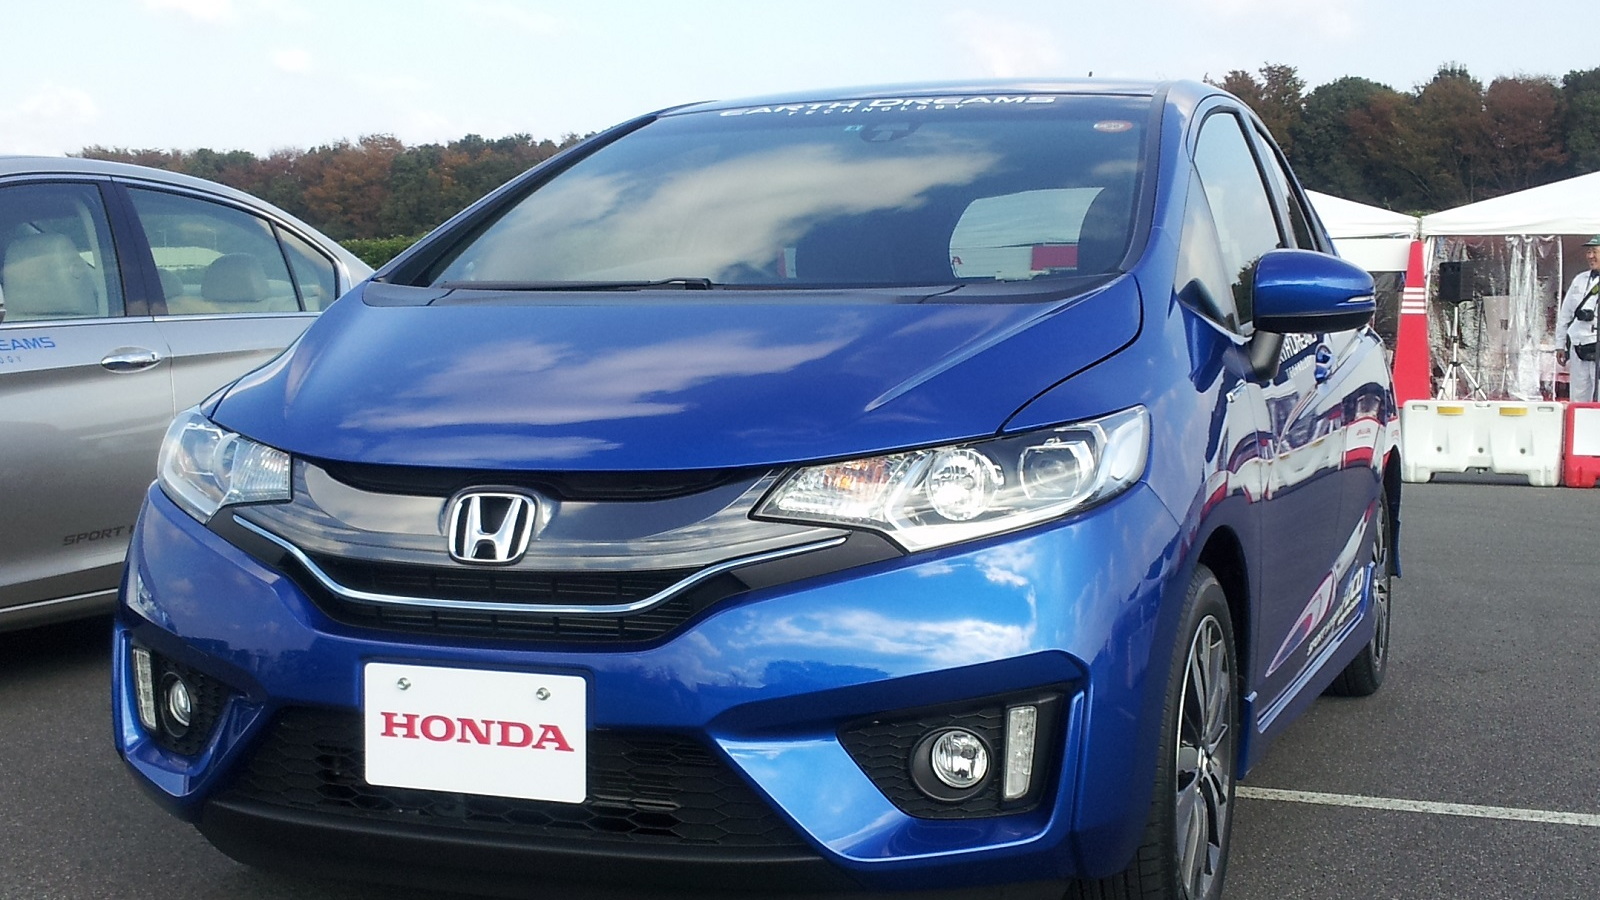 Honda Fit Hybrid (Japanese domestic model), Honda Proving Grounds, Tochigi, Japan, Nov 2013